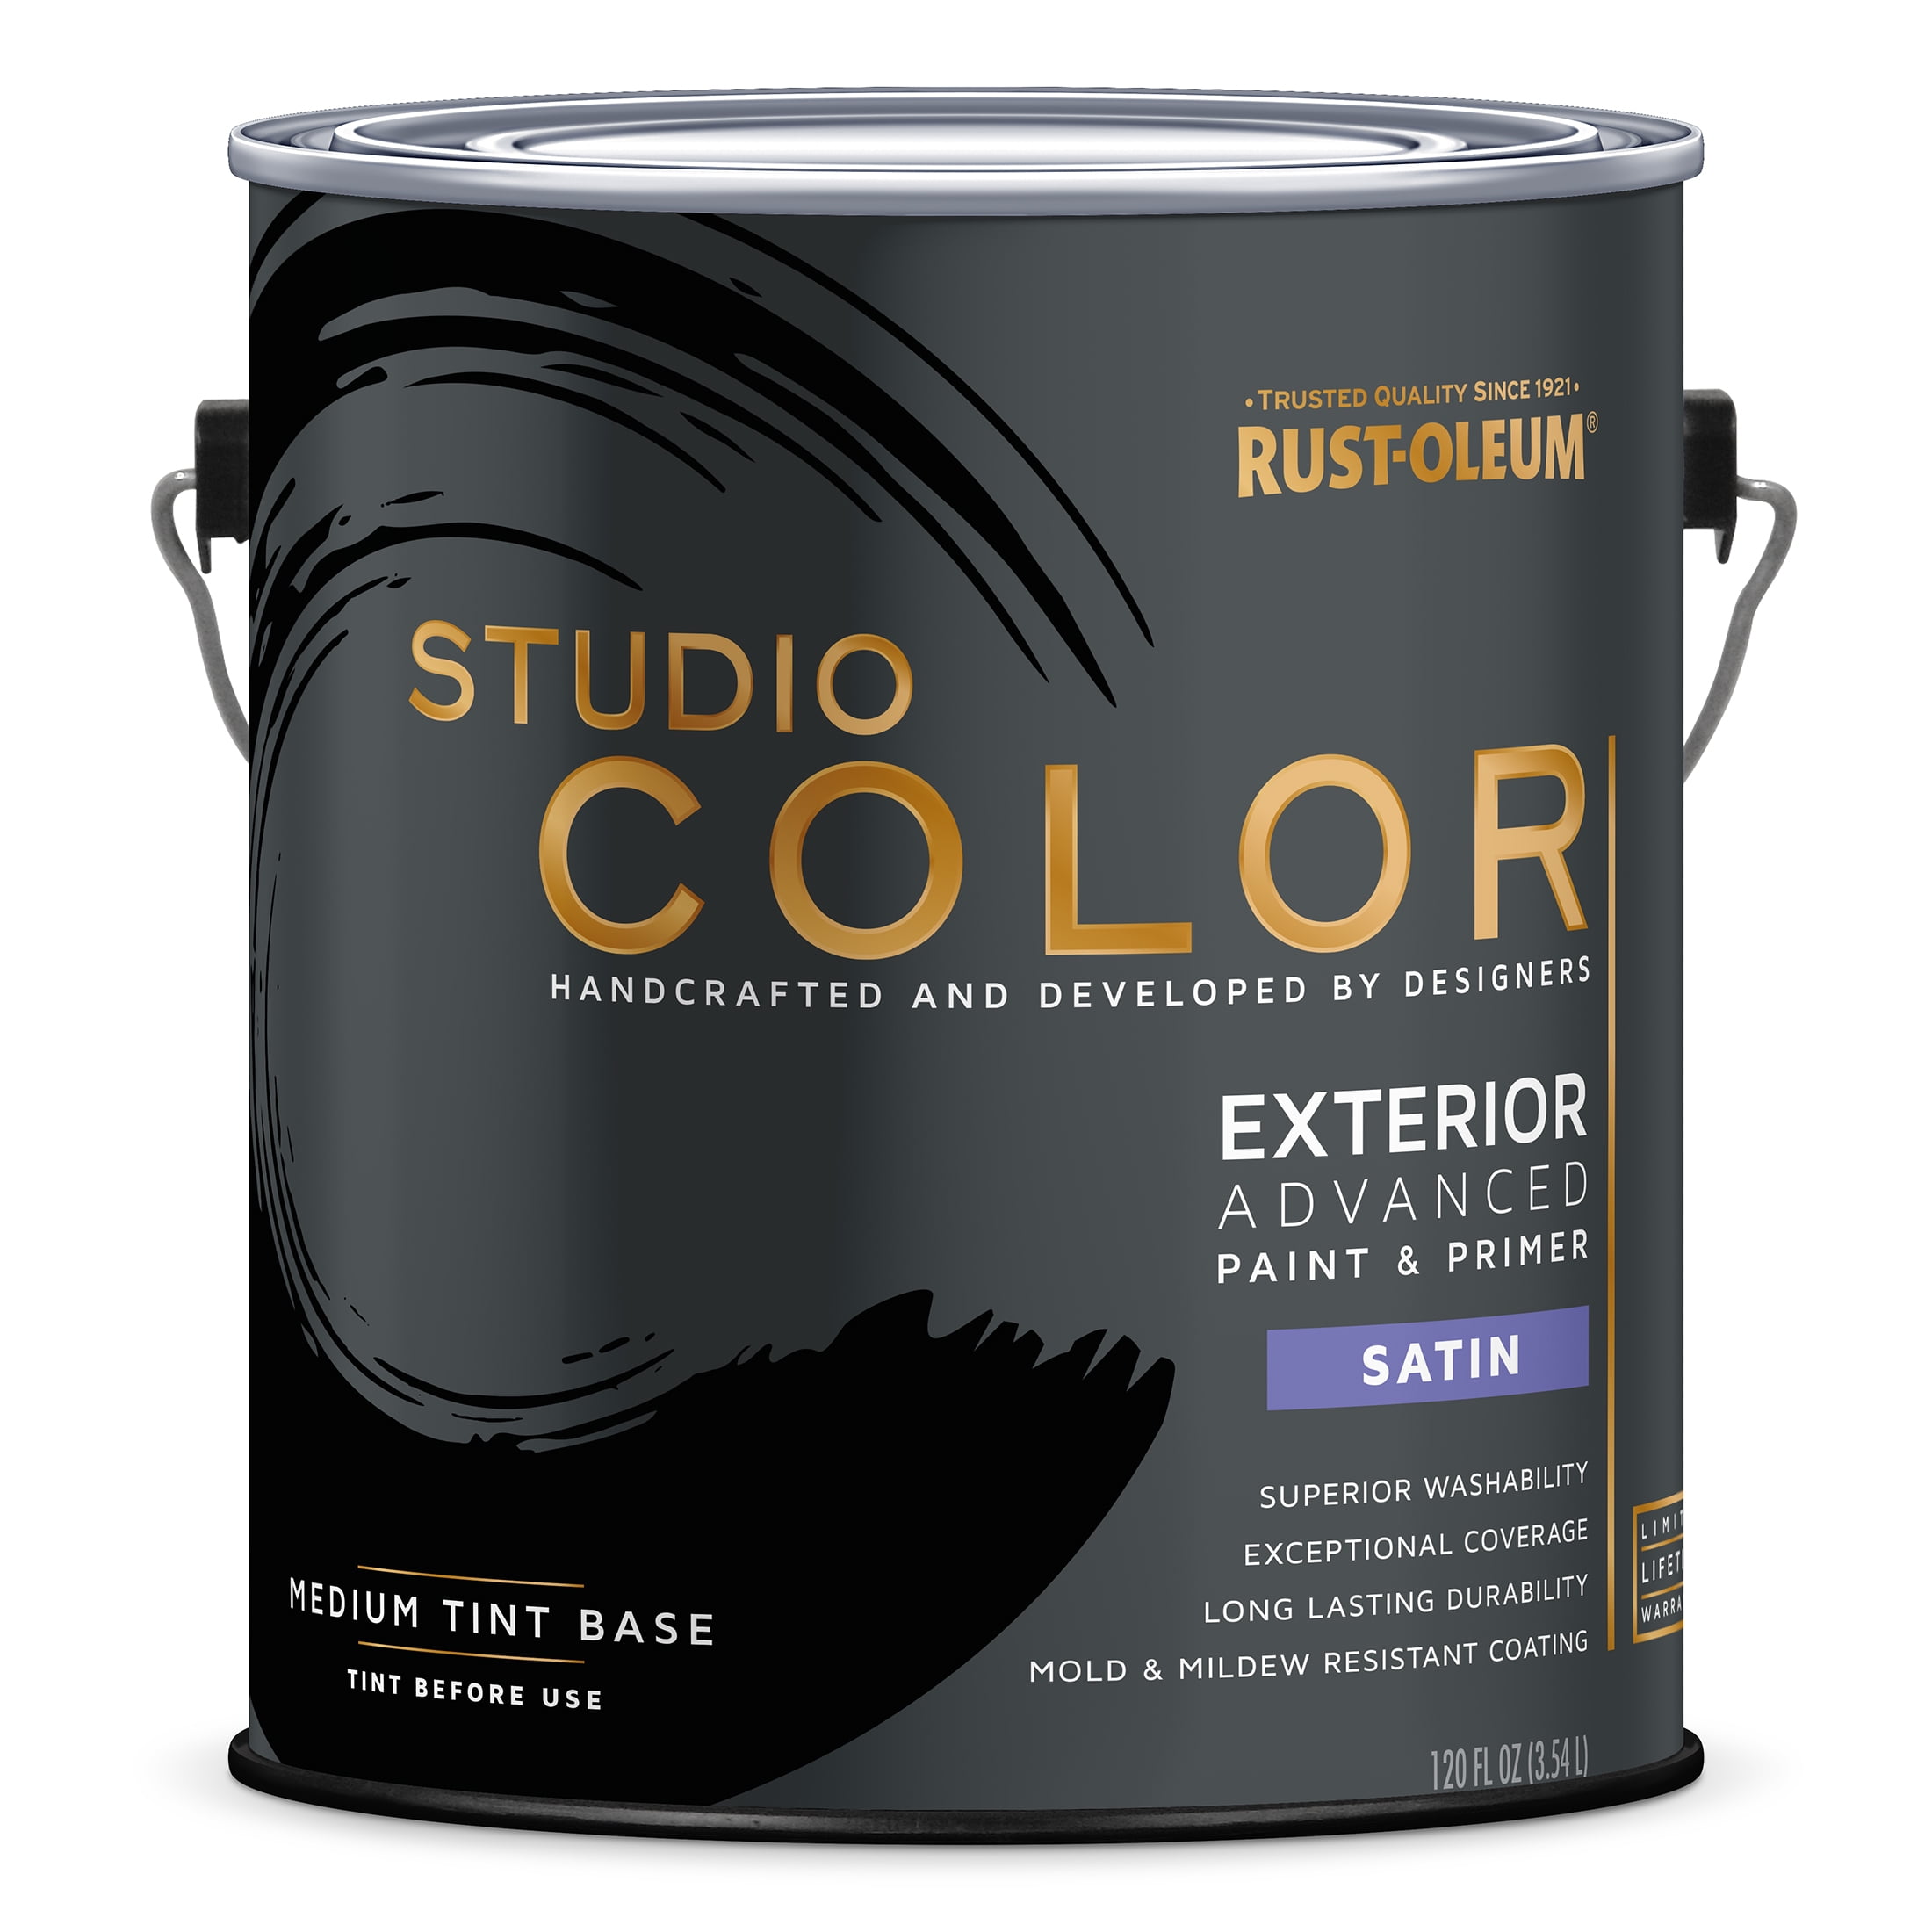 Medium Base, Rust-Oleum Studio Color Advanced Paint + Primer Exterior Satin, Gallon